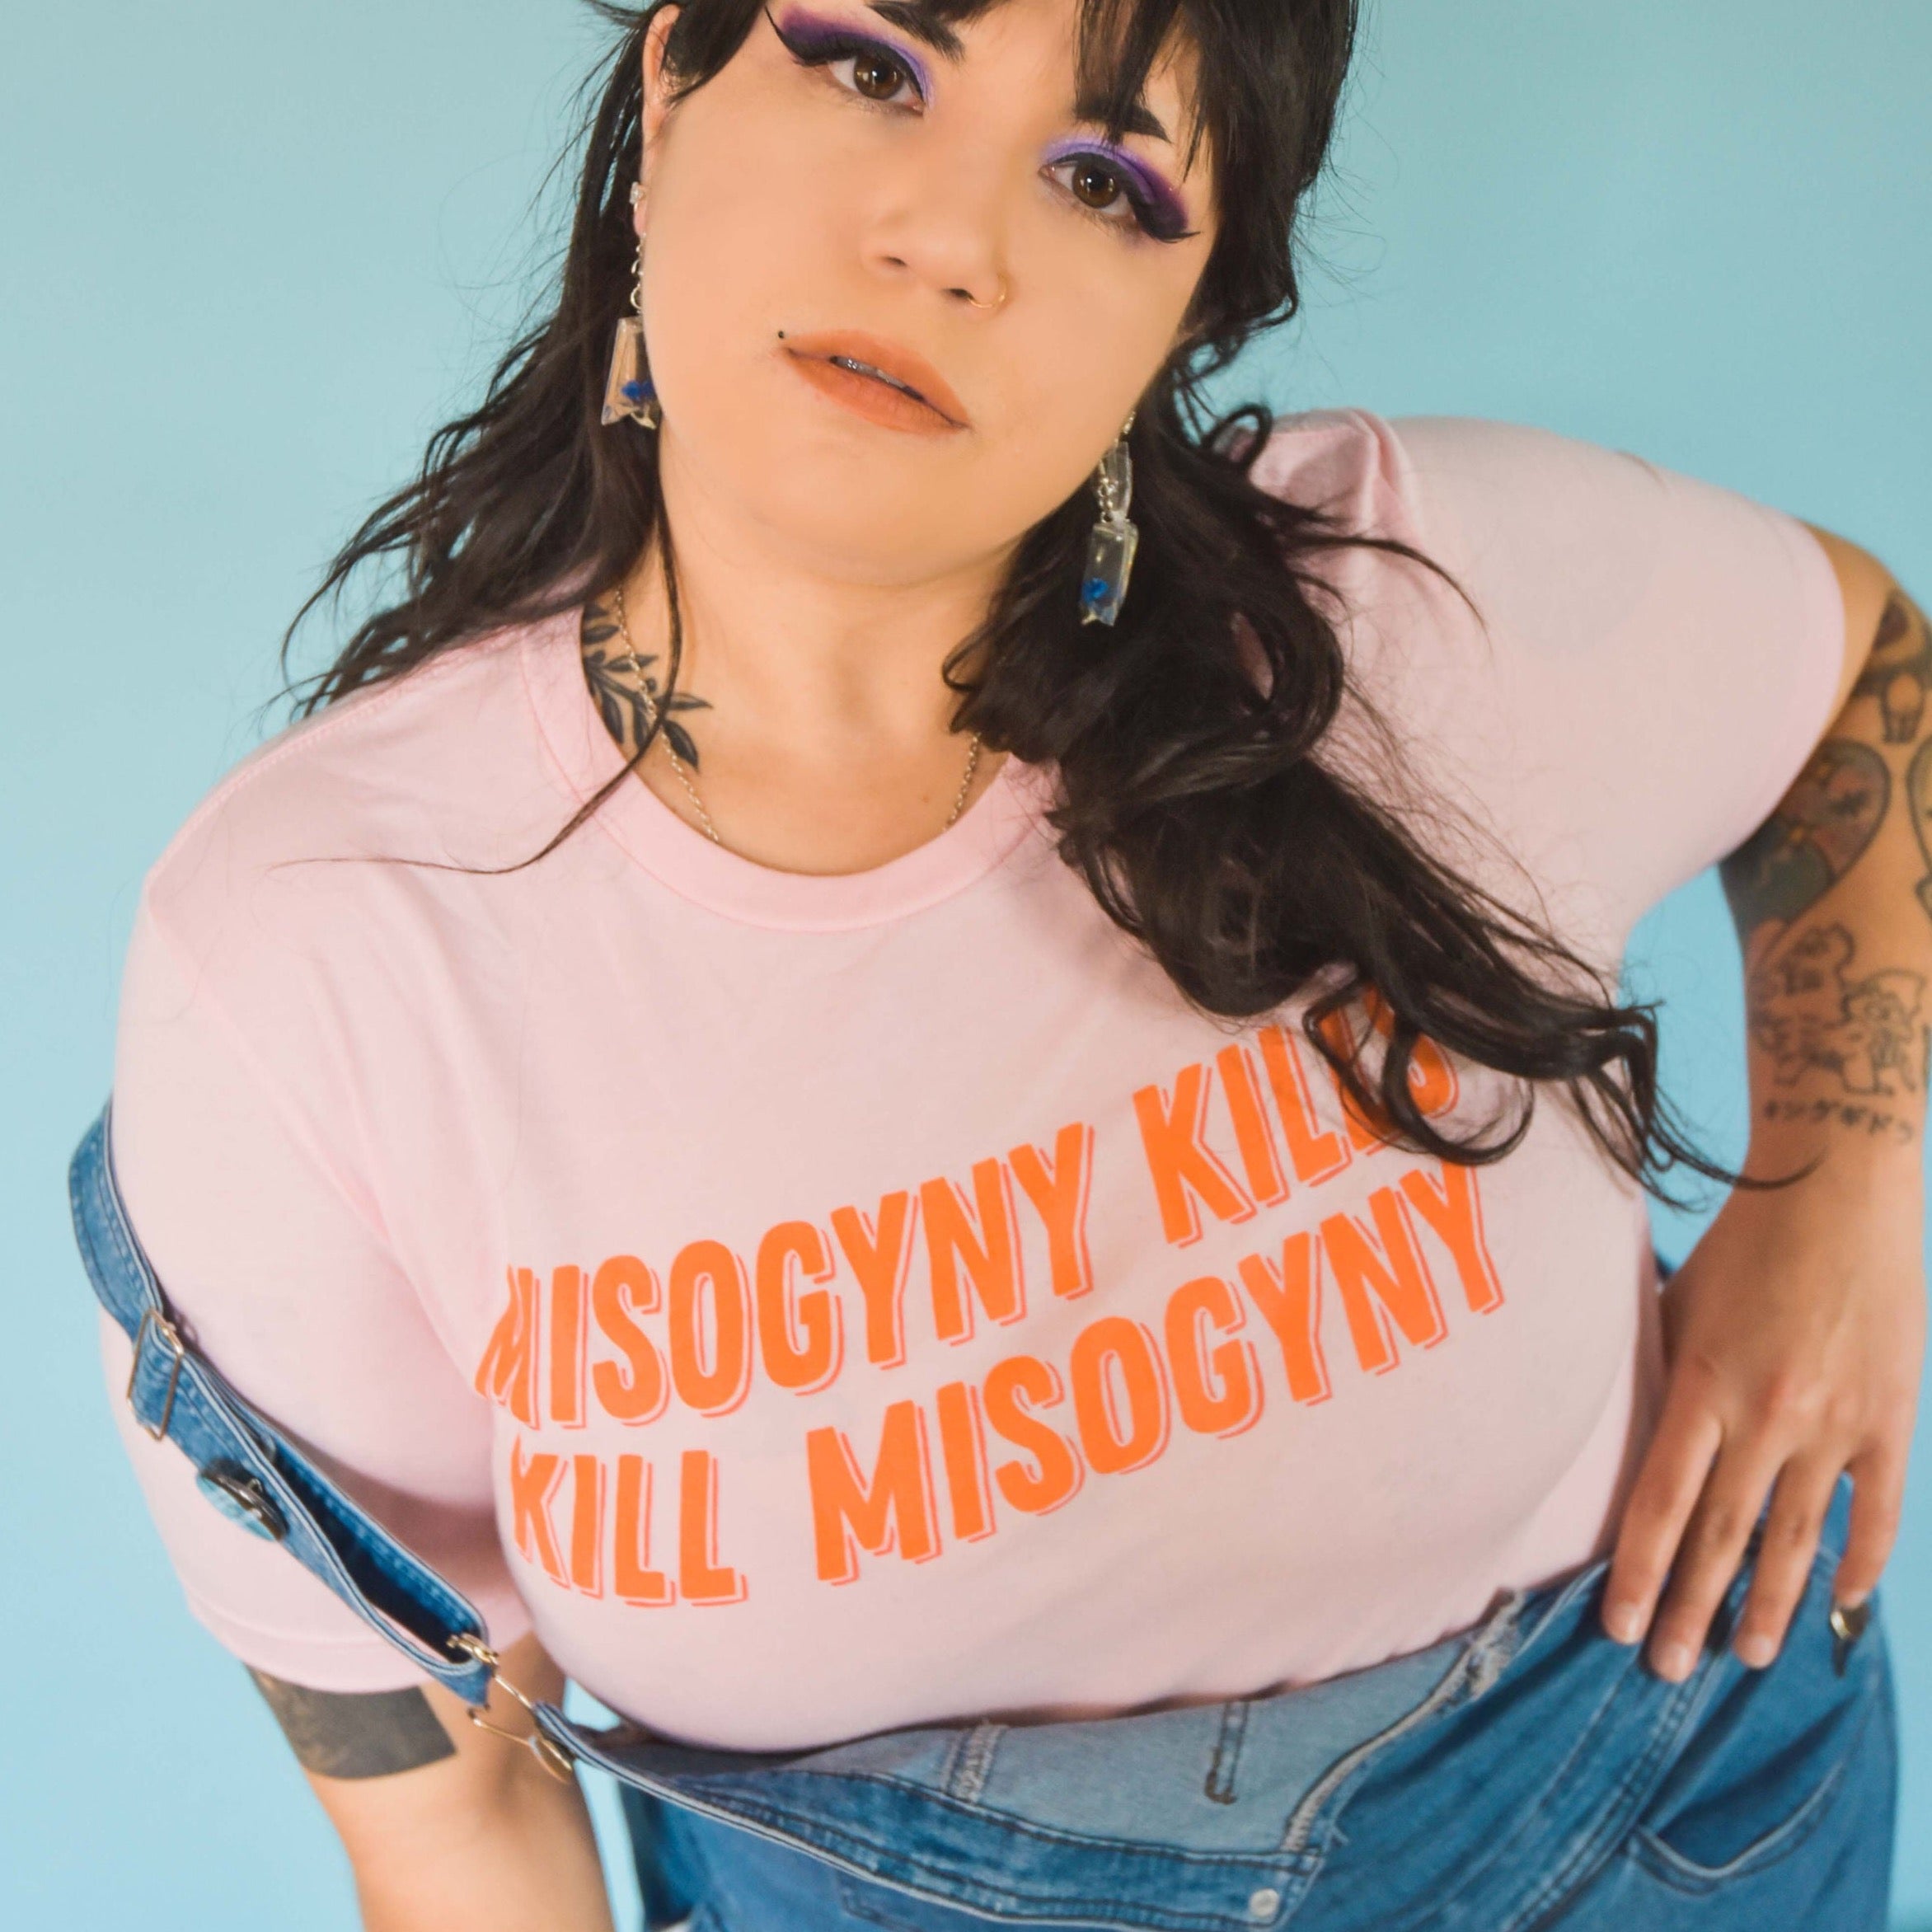 Misogyny Kills Kill Misogyny Unisex Feminist T-Shirt - Feminist Trash Store - Shop Women’s Rights T-shirts - Pink Plus Size T-shirt